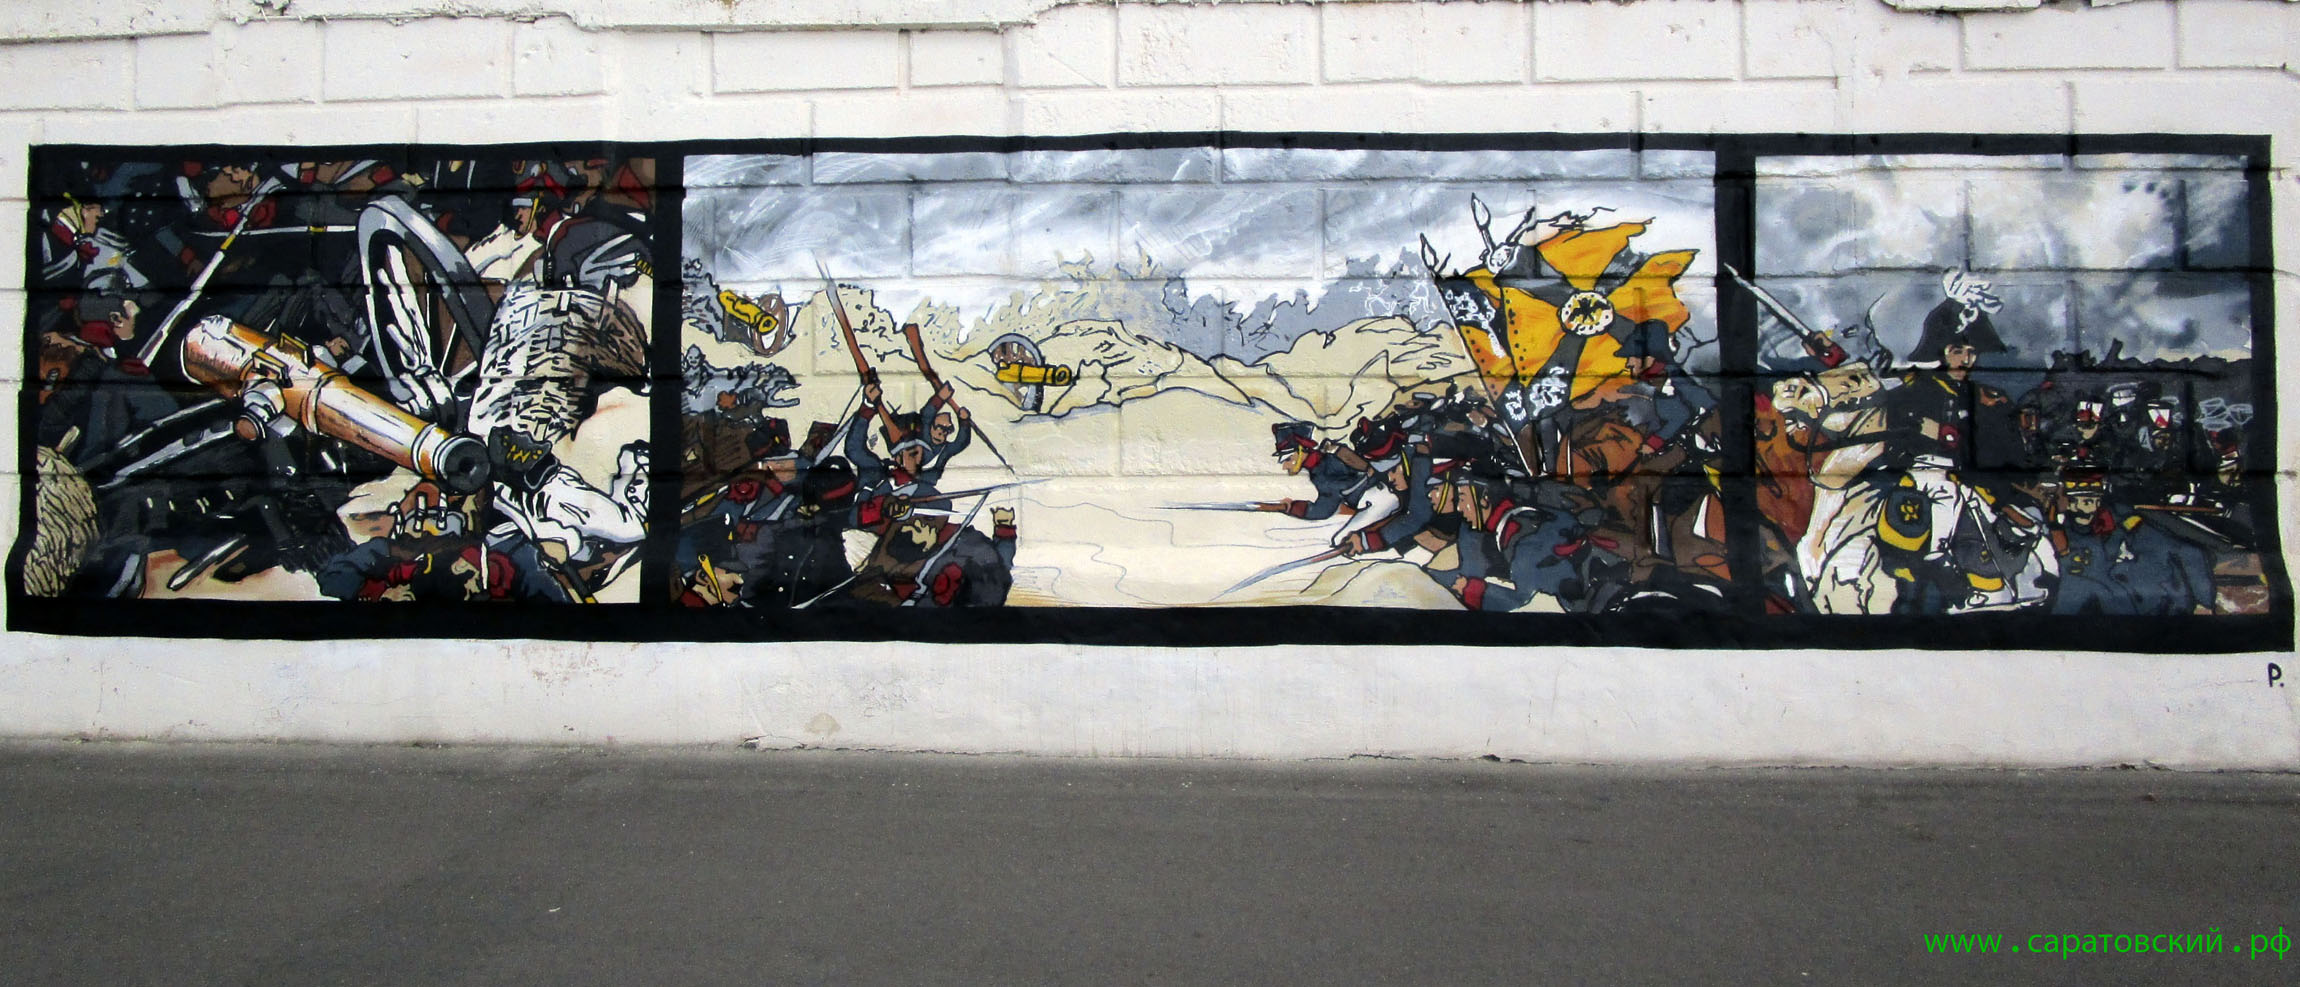 Saratov waterfront graffiti: the Patriotic War of 1812 and Saratov, Russia